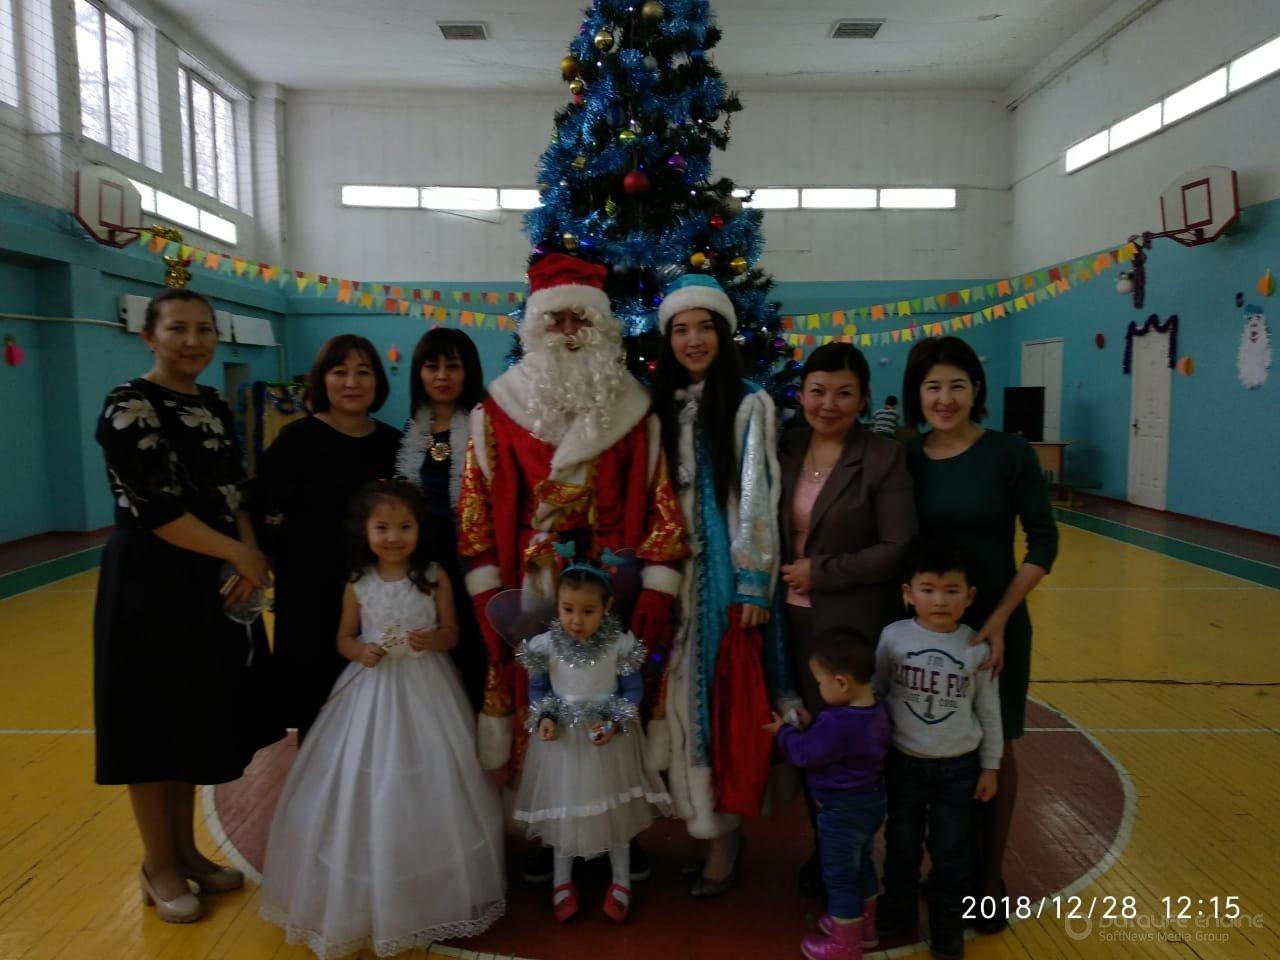 Administration школы провела новогодний праздник для детей коллектива школы. Огромное СПАСИБО от коллектива!!!